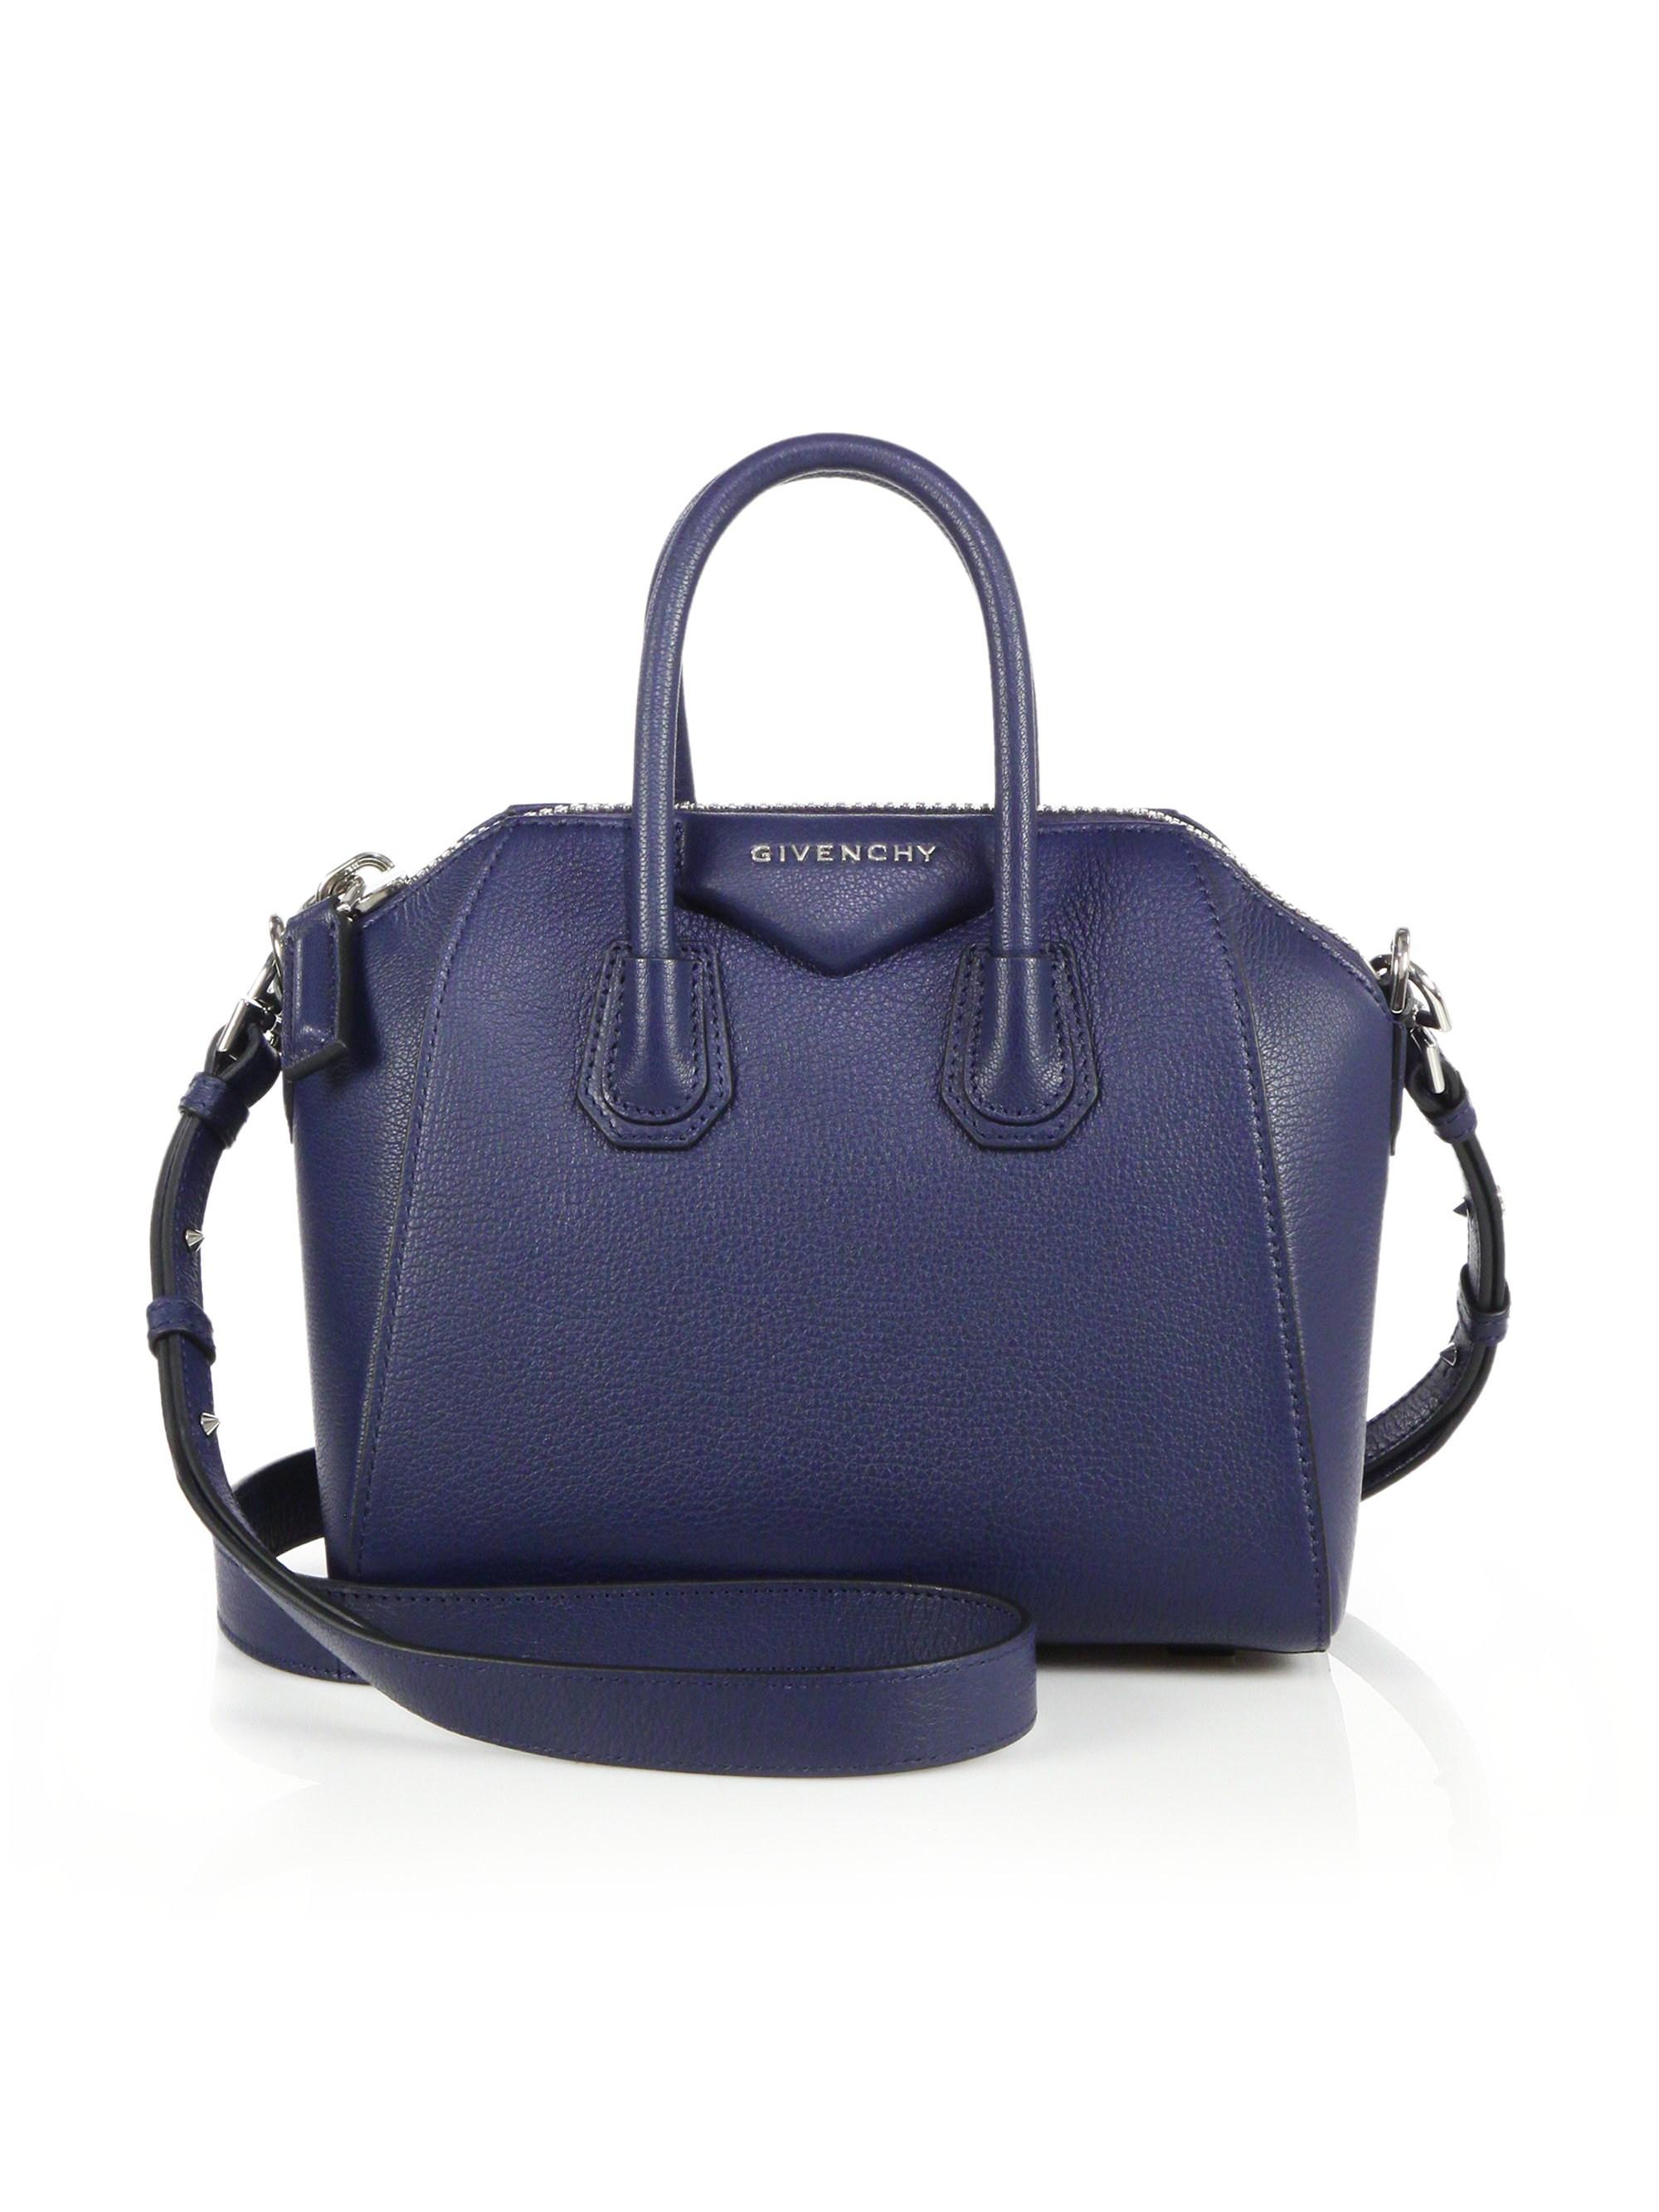 Lyst - Givenchy Antigona Mini Leather Satchel in Blue